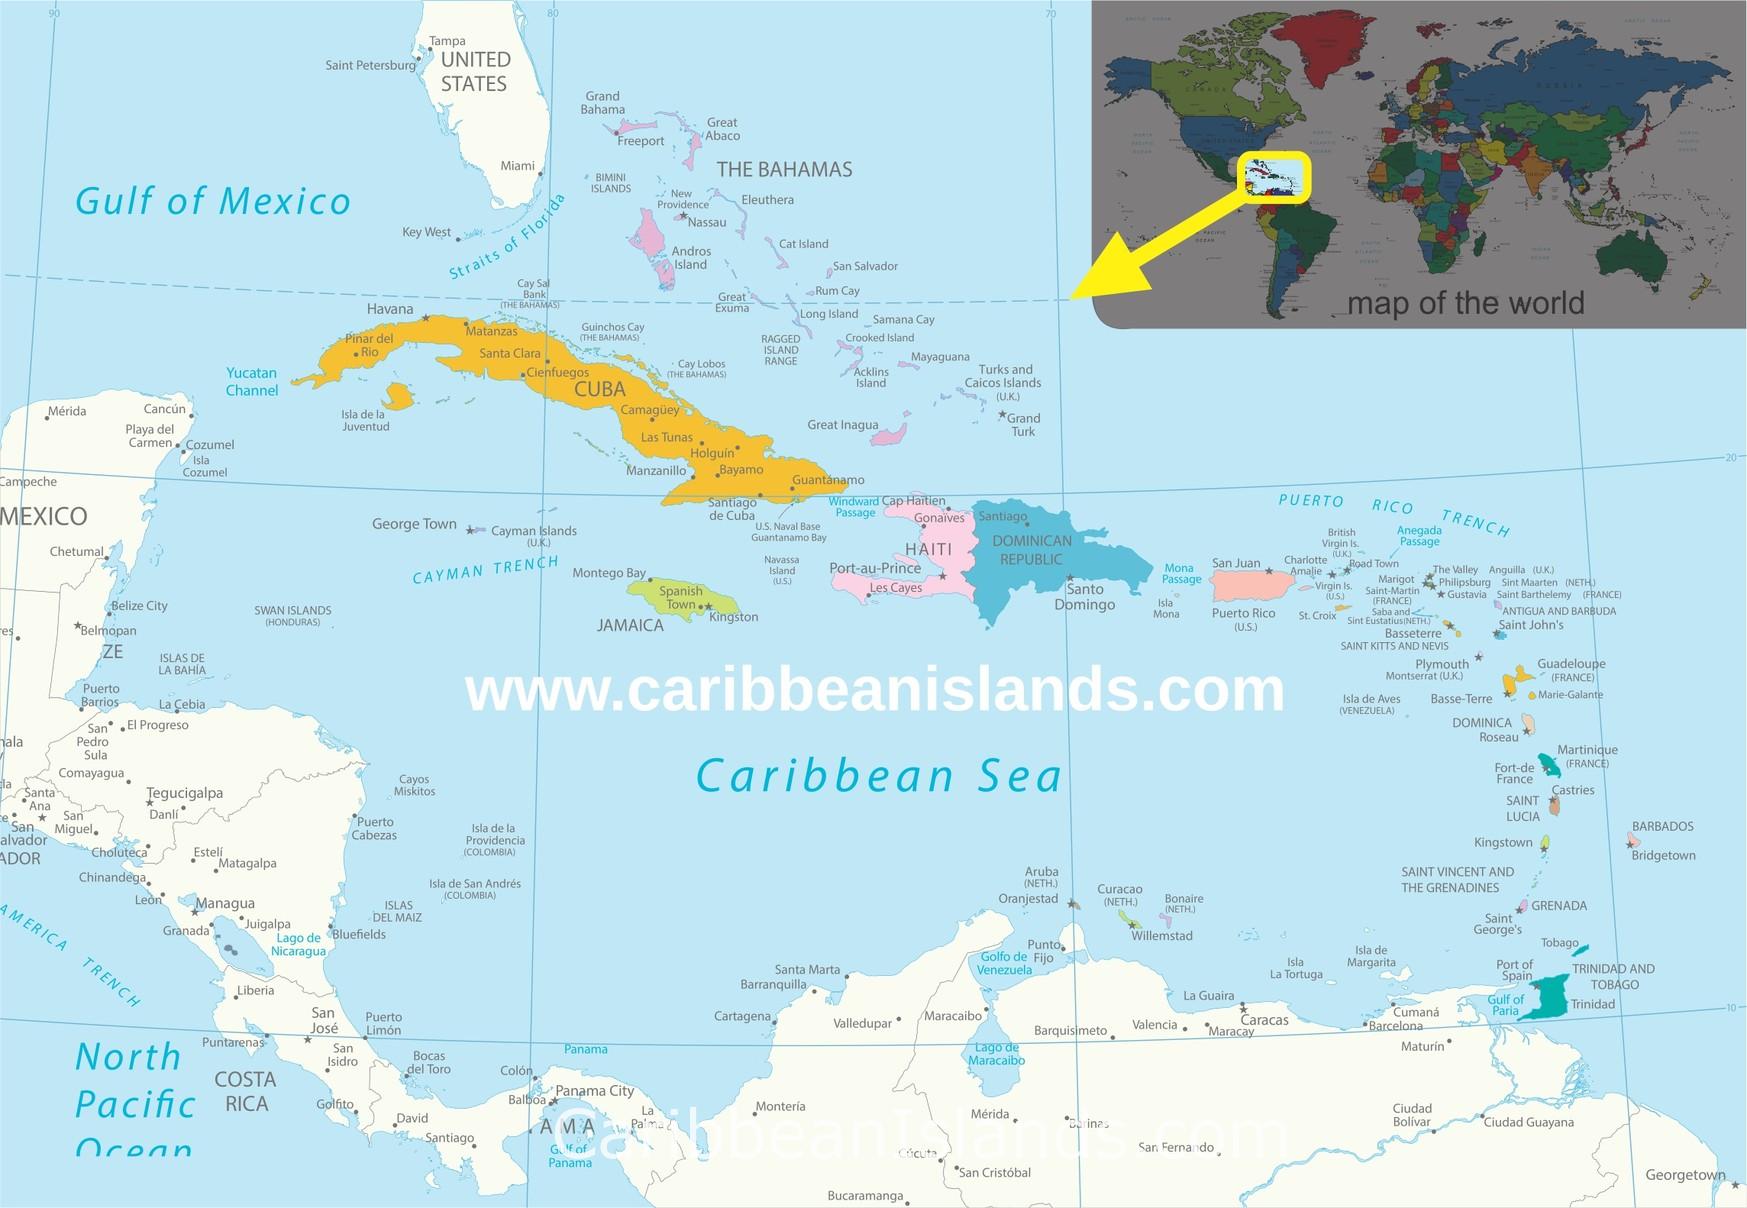  Kart over de karibiske øyer